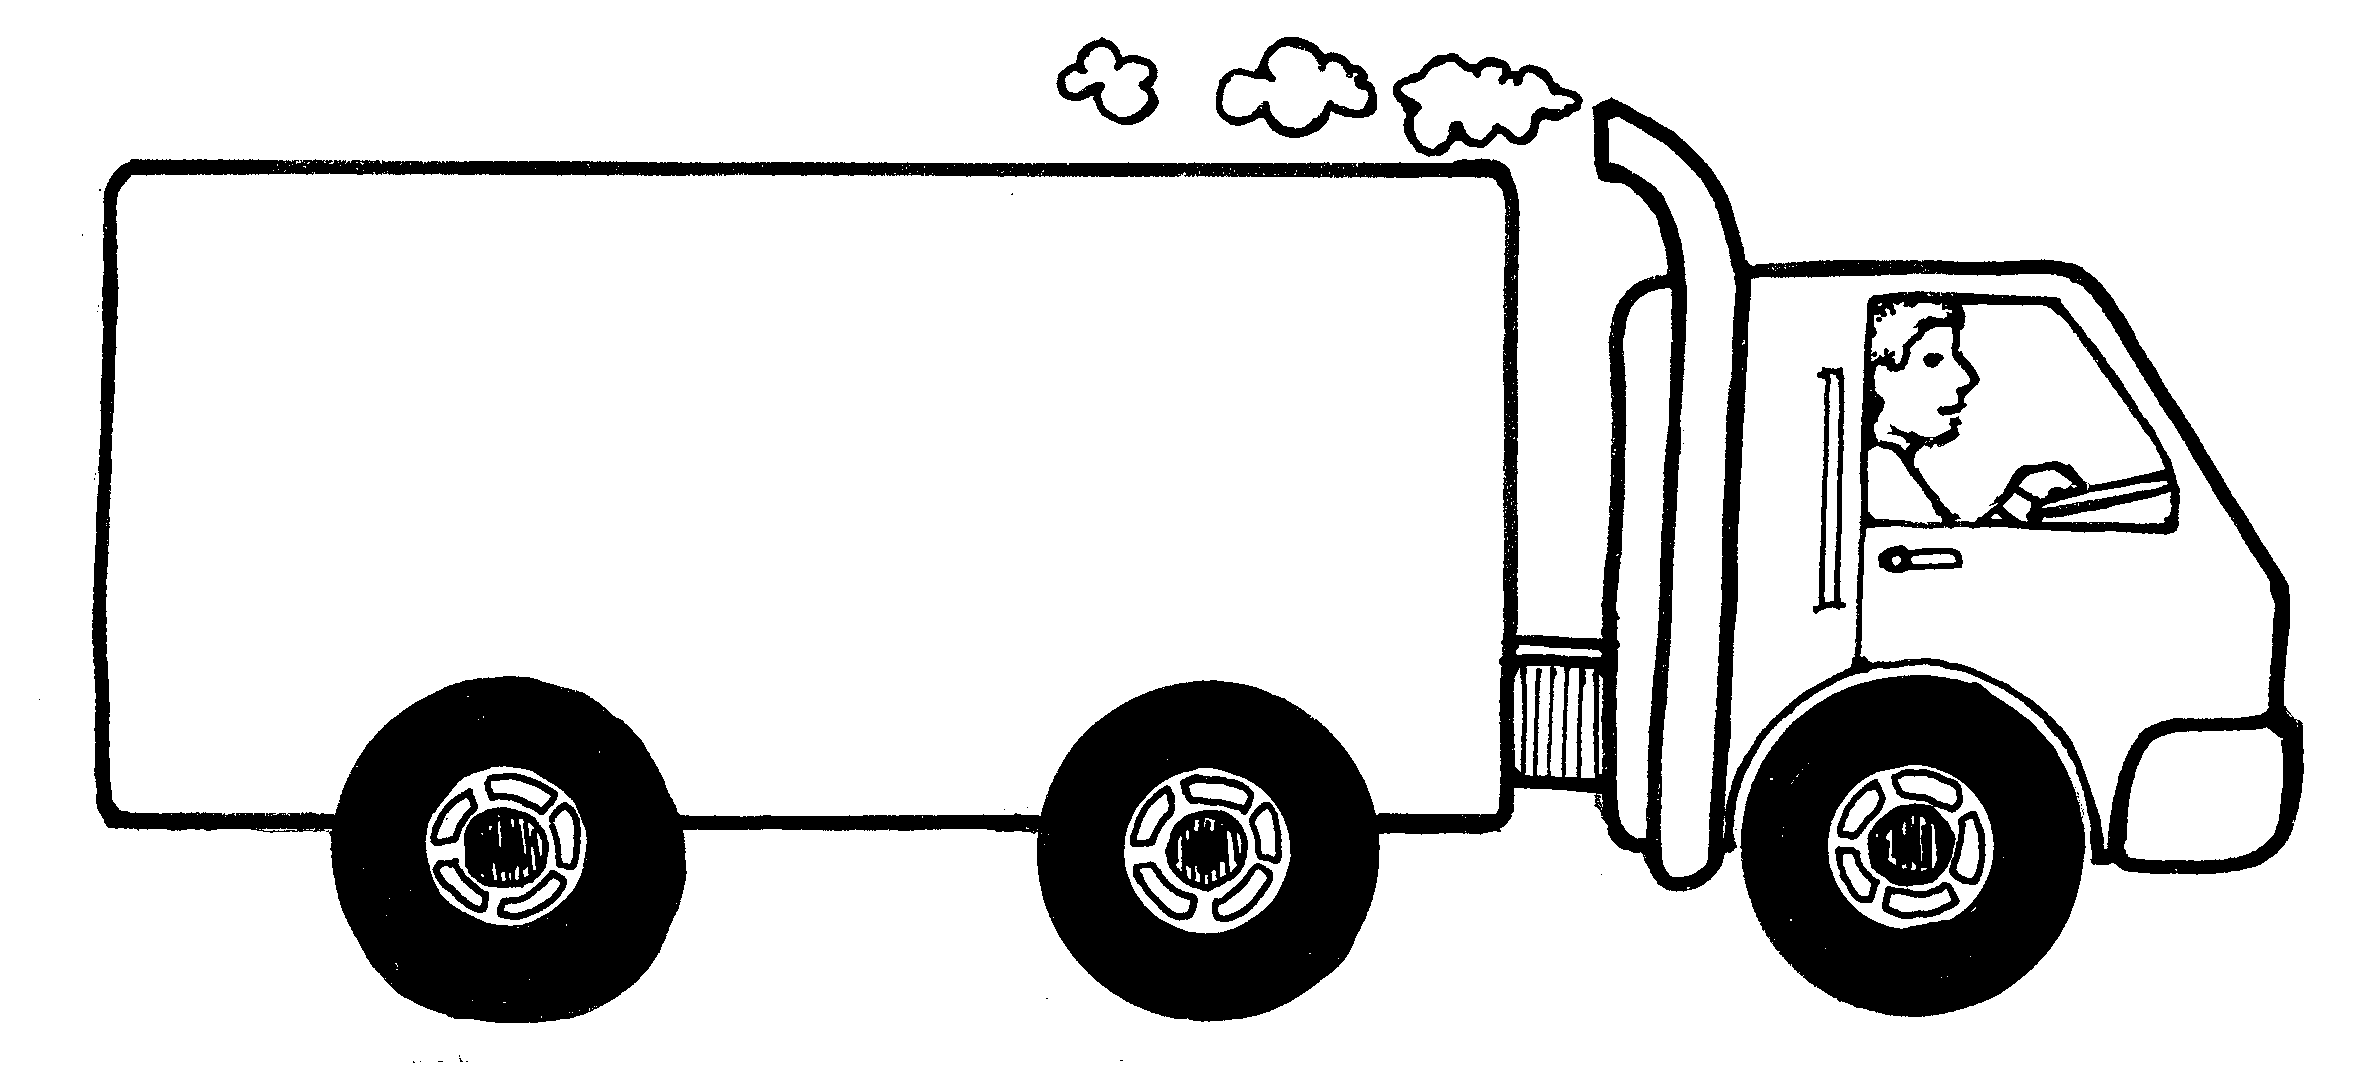 Semi truck clipart black and white free clipart 4